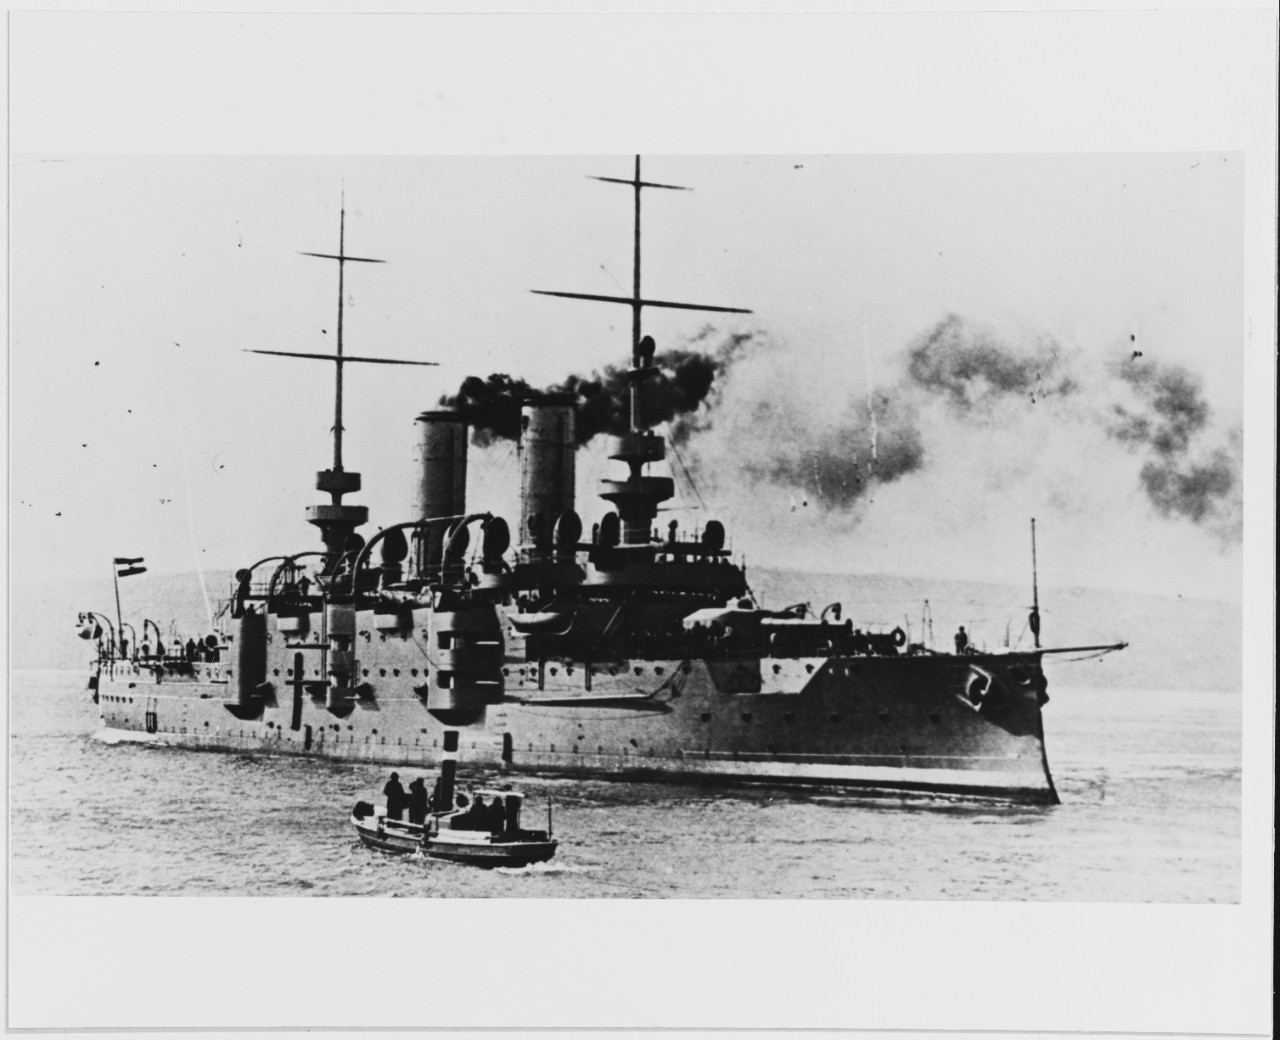 HABSBURG (Austrian battleship, 1900-1920)